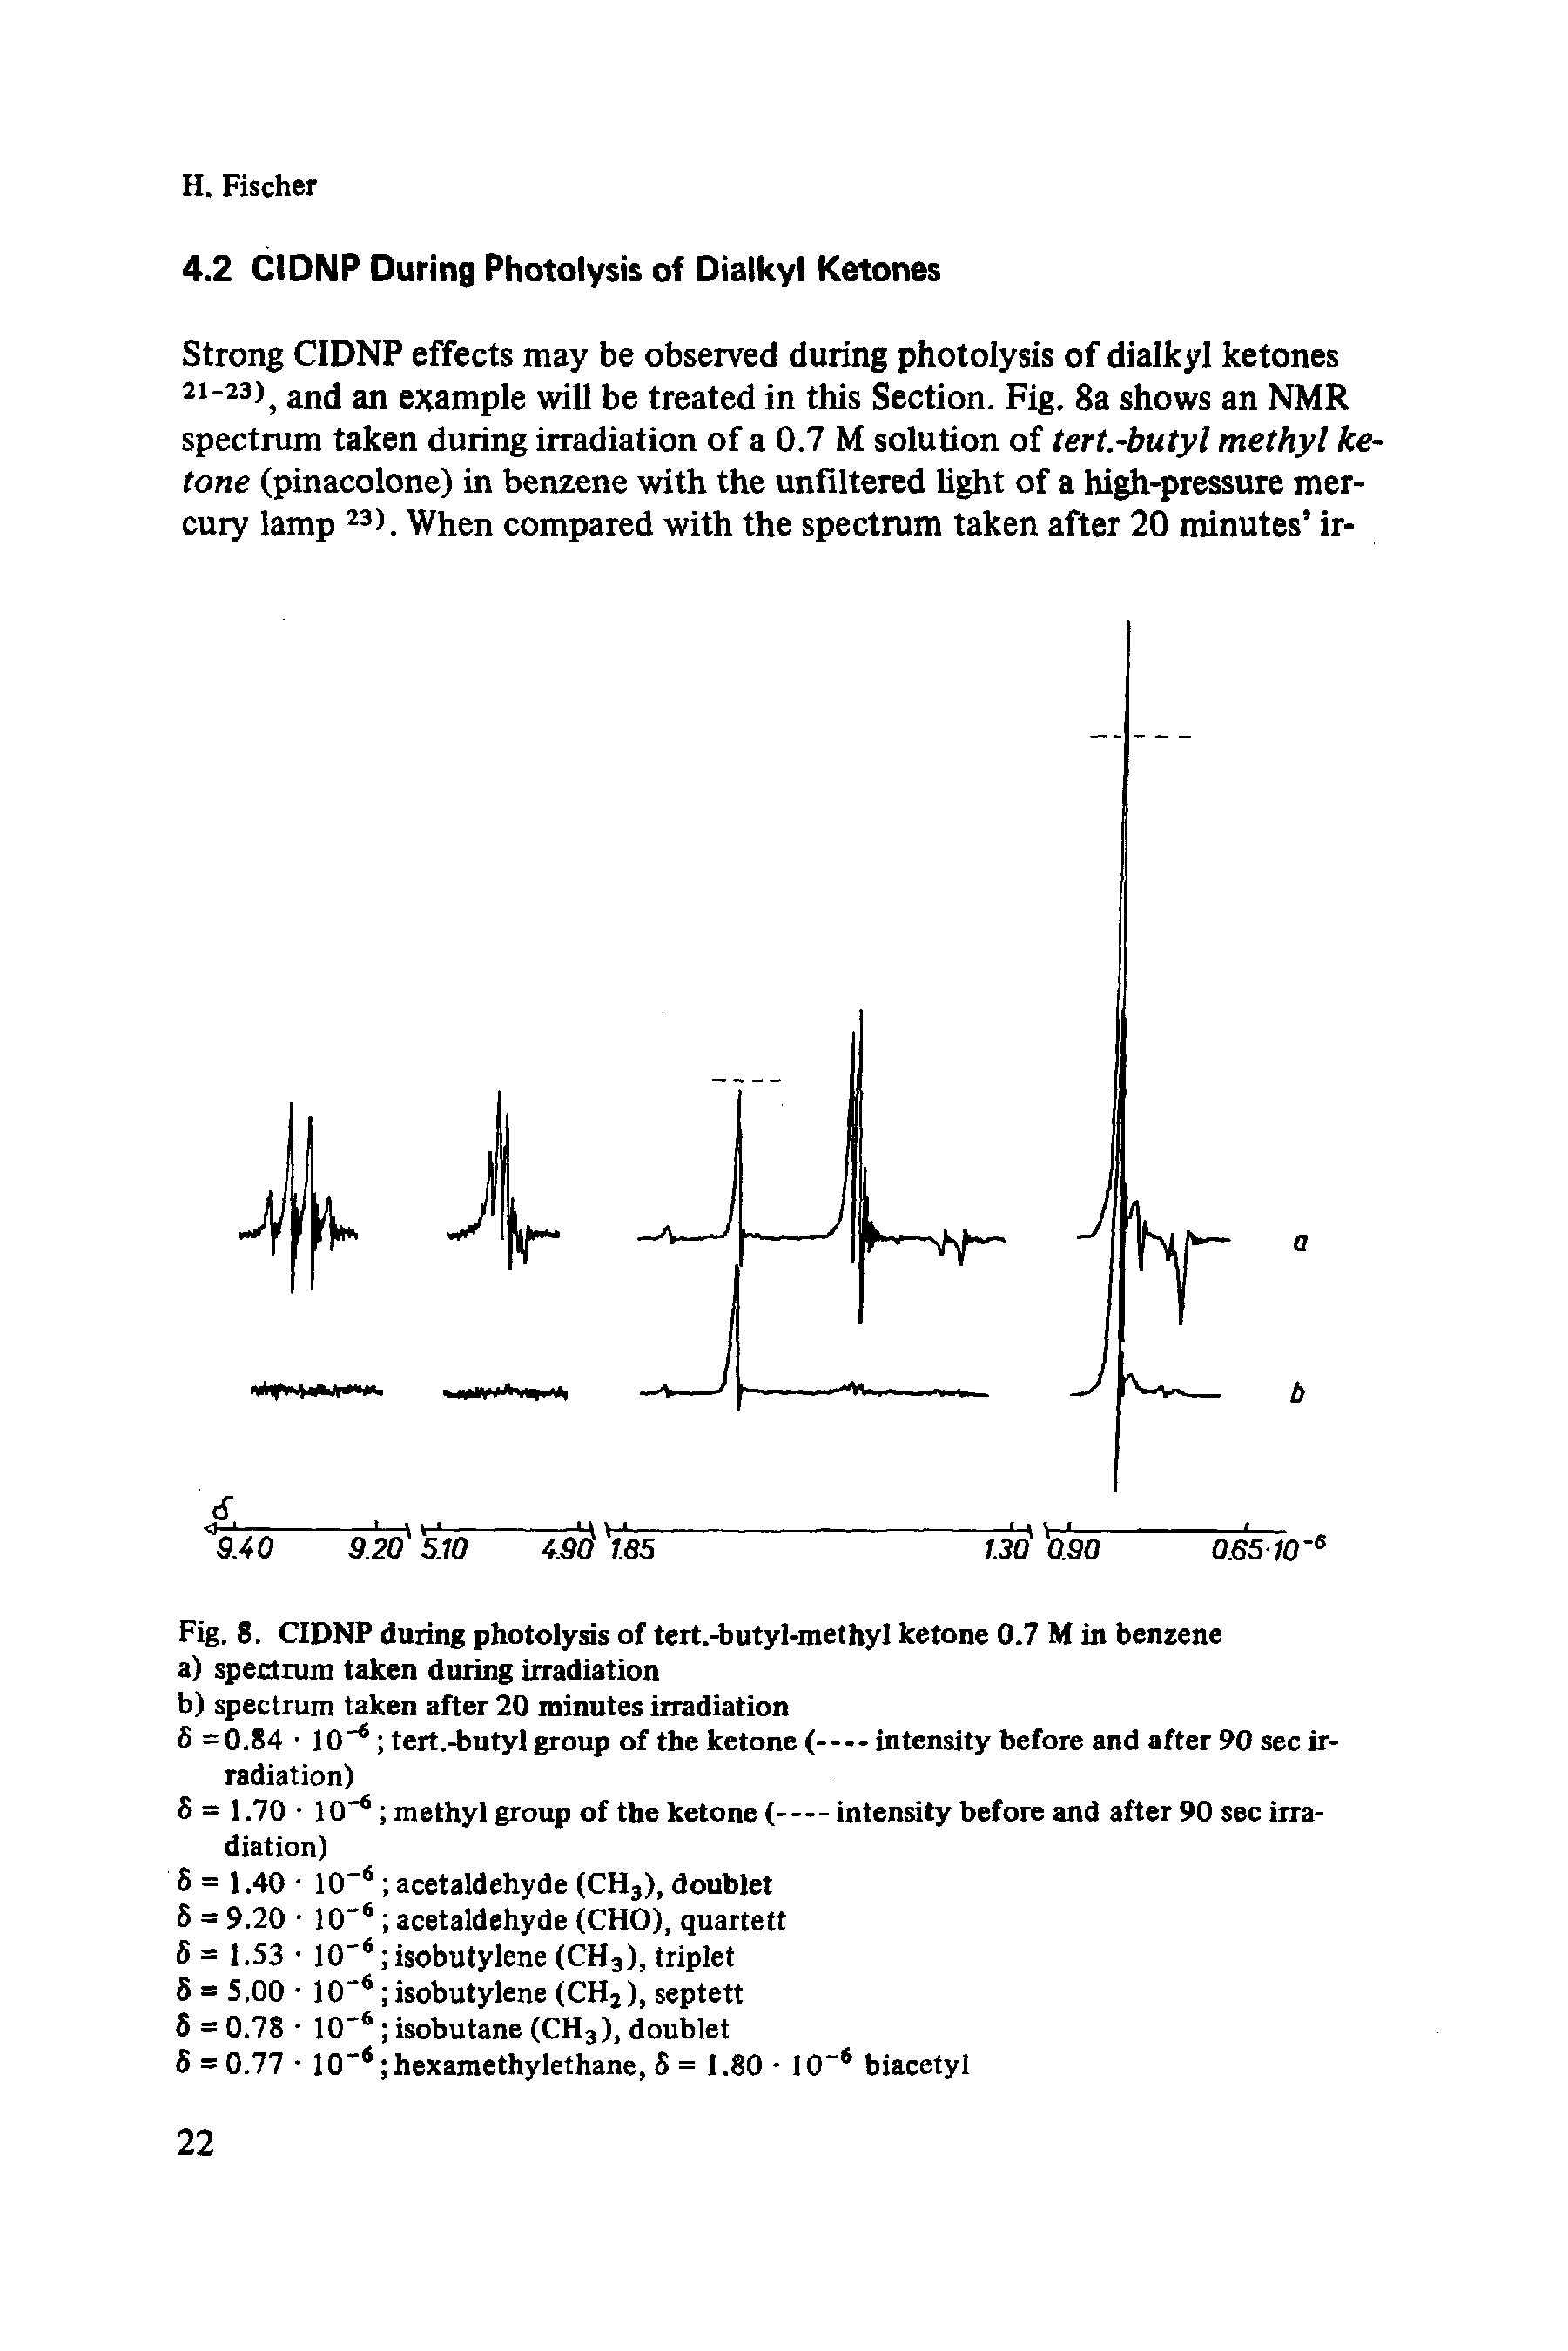 Fig. 8. CIDNP during photolysis of tert.-butyl-methyl ketone 0.7 M in benzene...